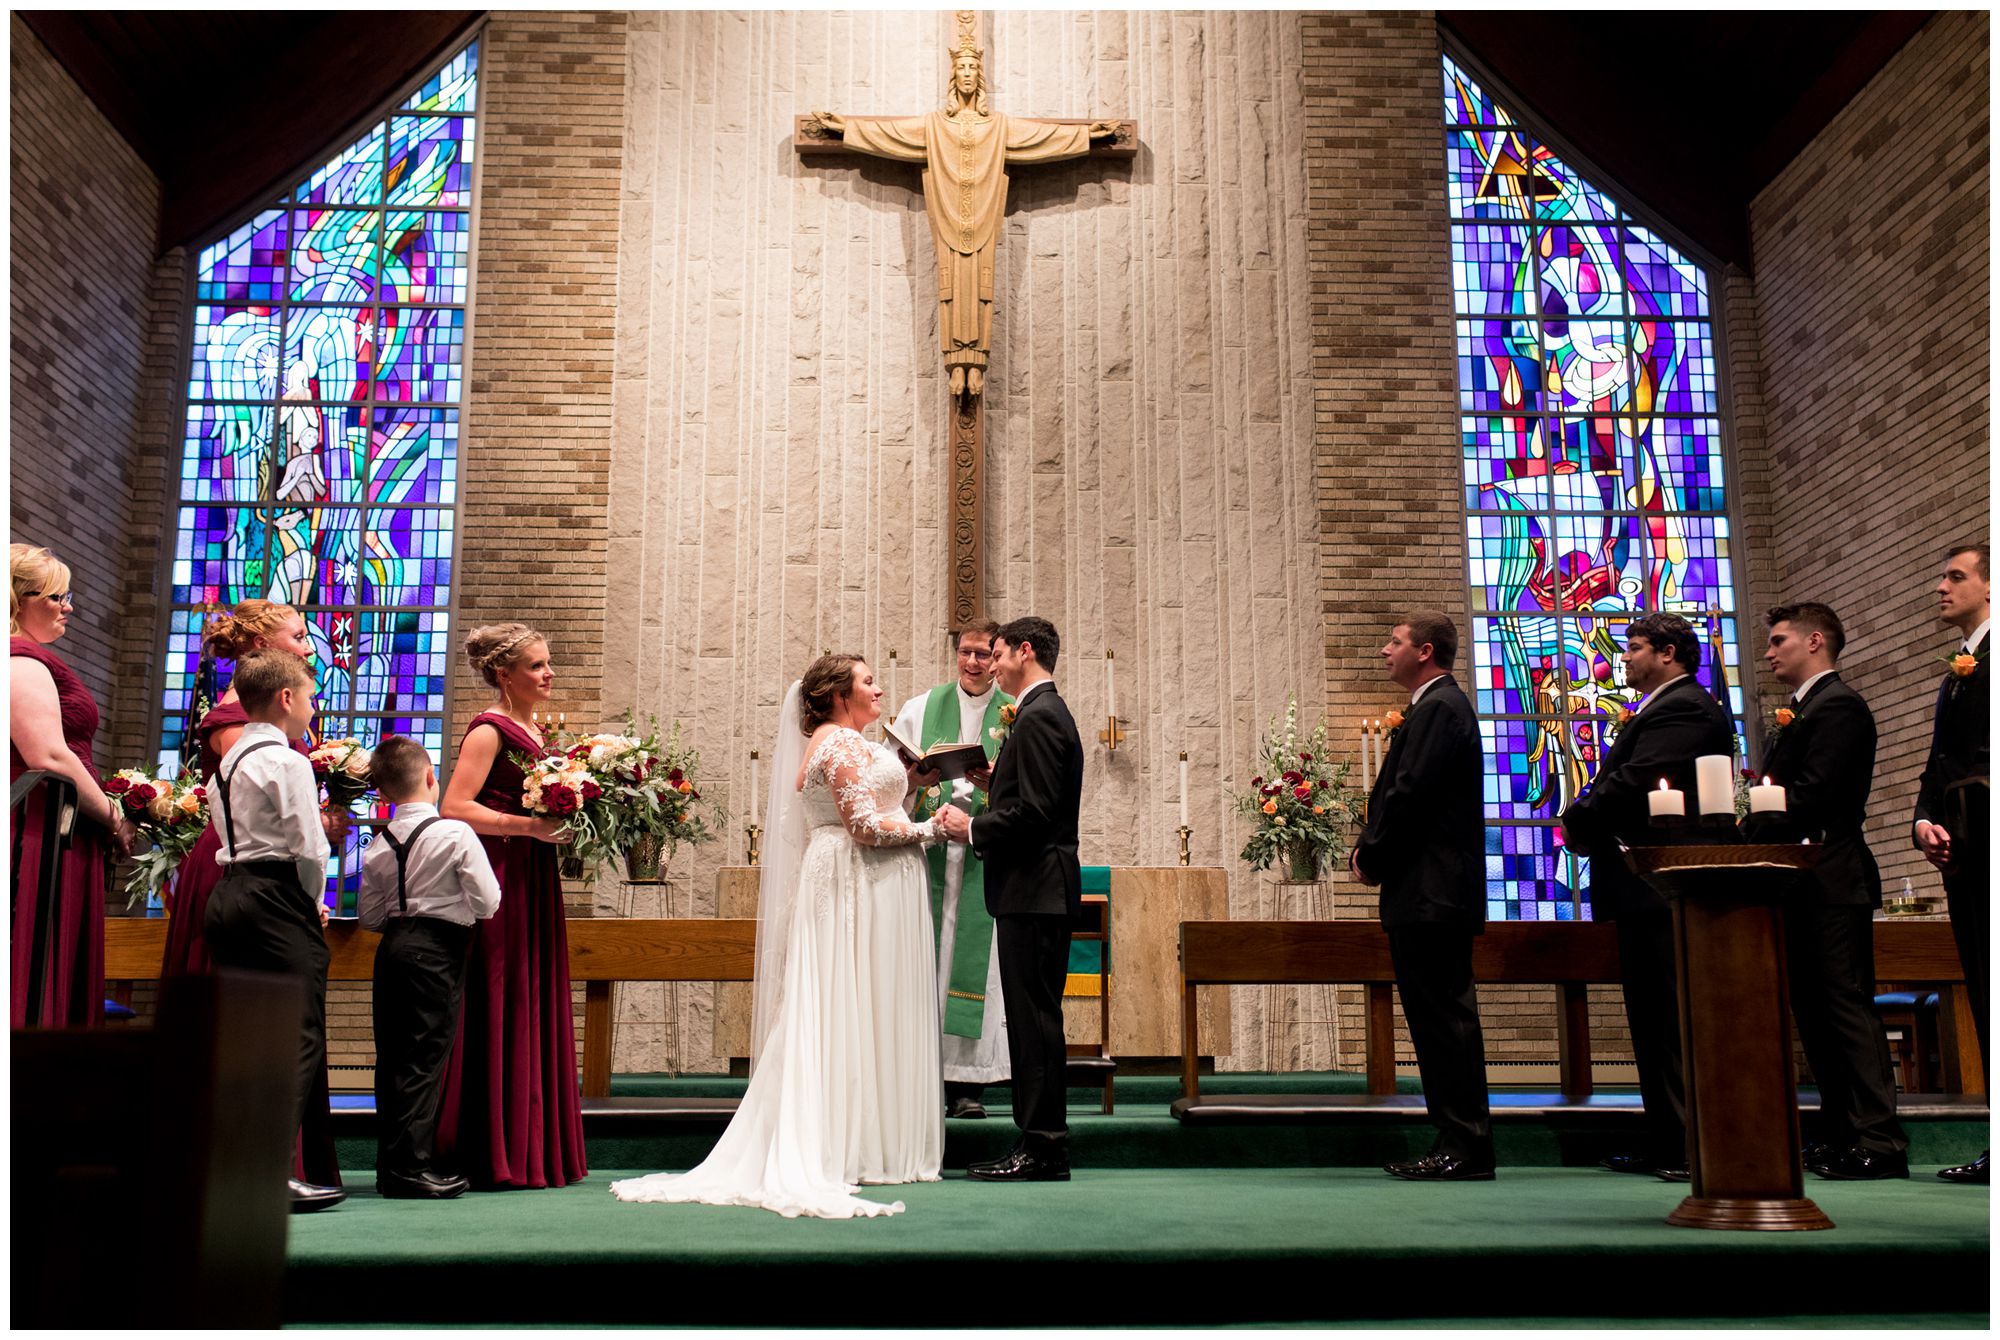 Zion Lutheran Church Decatur Indiana wedding ceremony